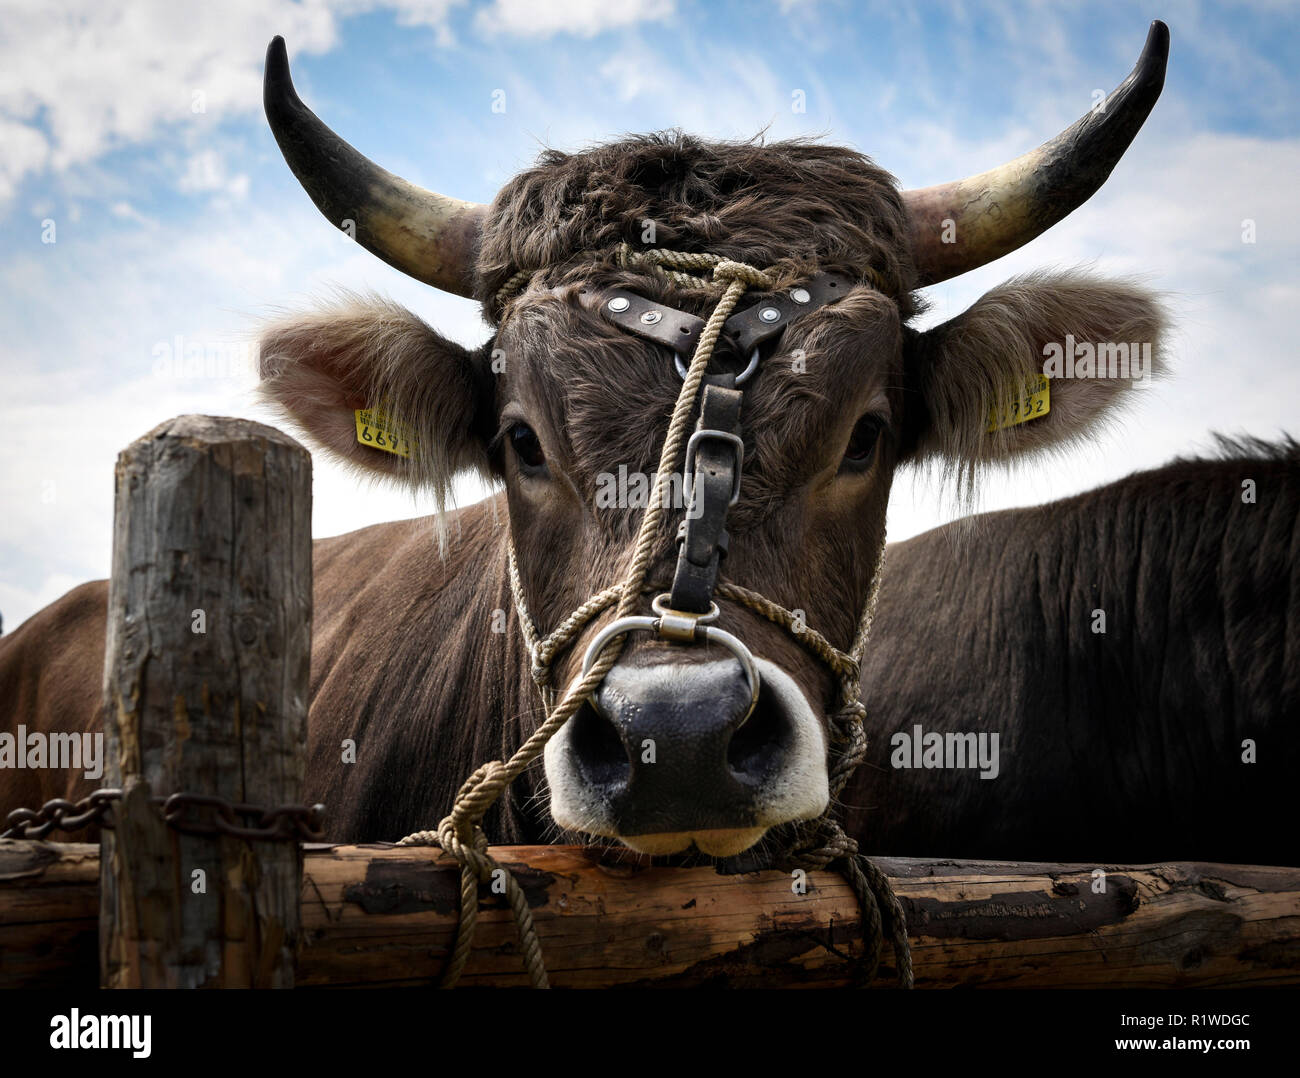 Bull, retrato animal, Bull market, Zug, Suiza Foto de stock